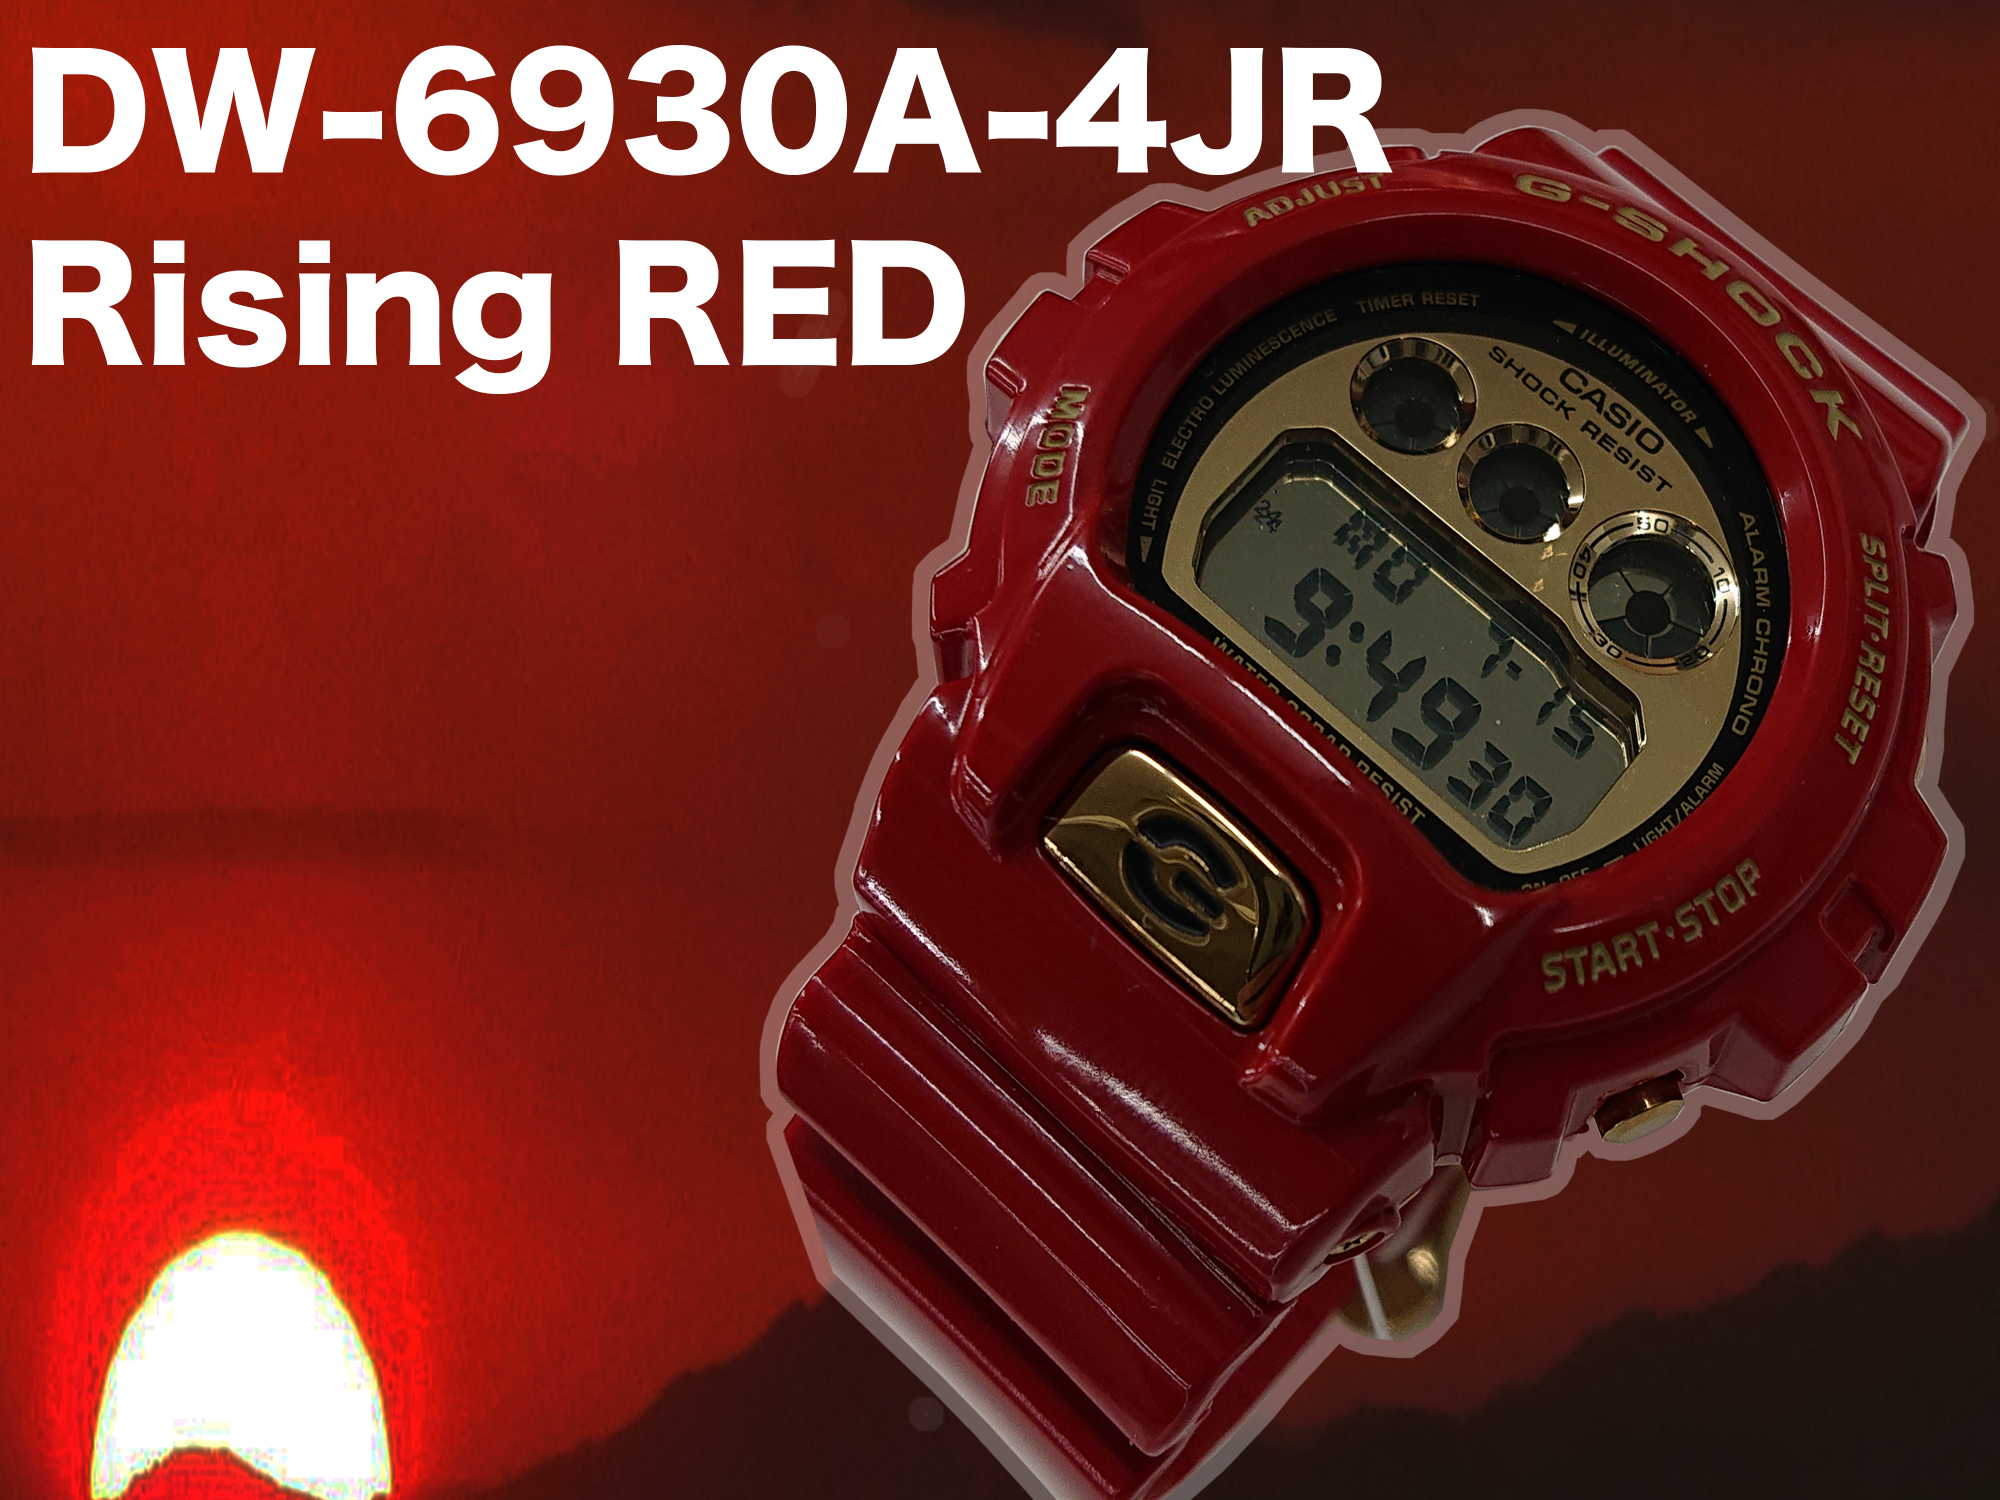 G-SHOCK買取実績】DW-6930A-4JR 30周年 三つ目 Rising RED買取ました ...